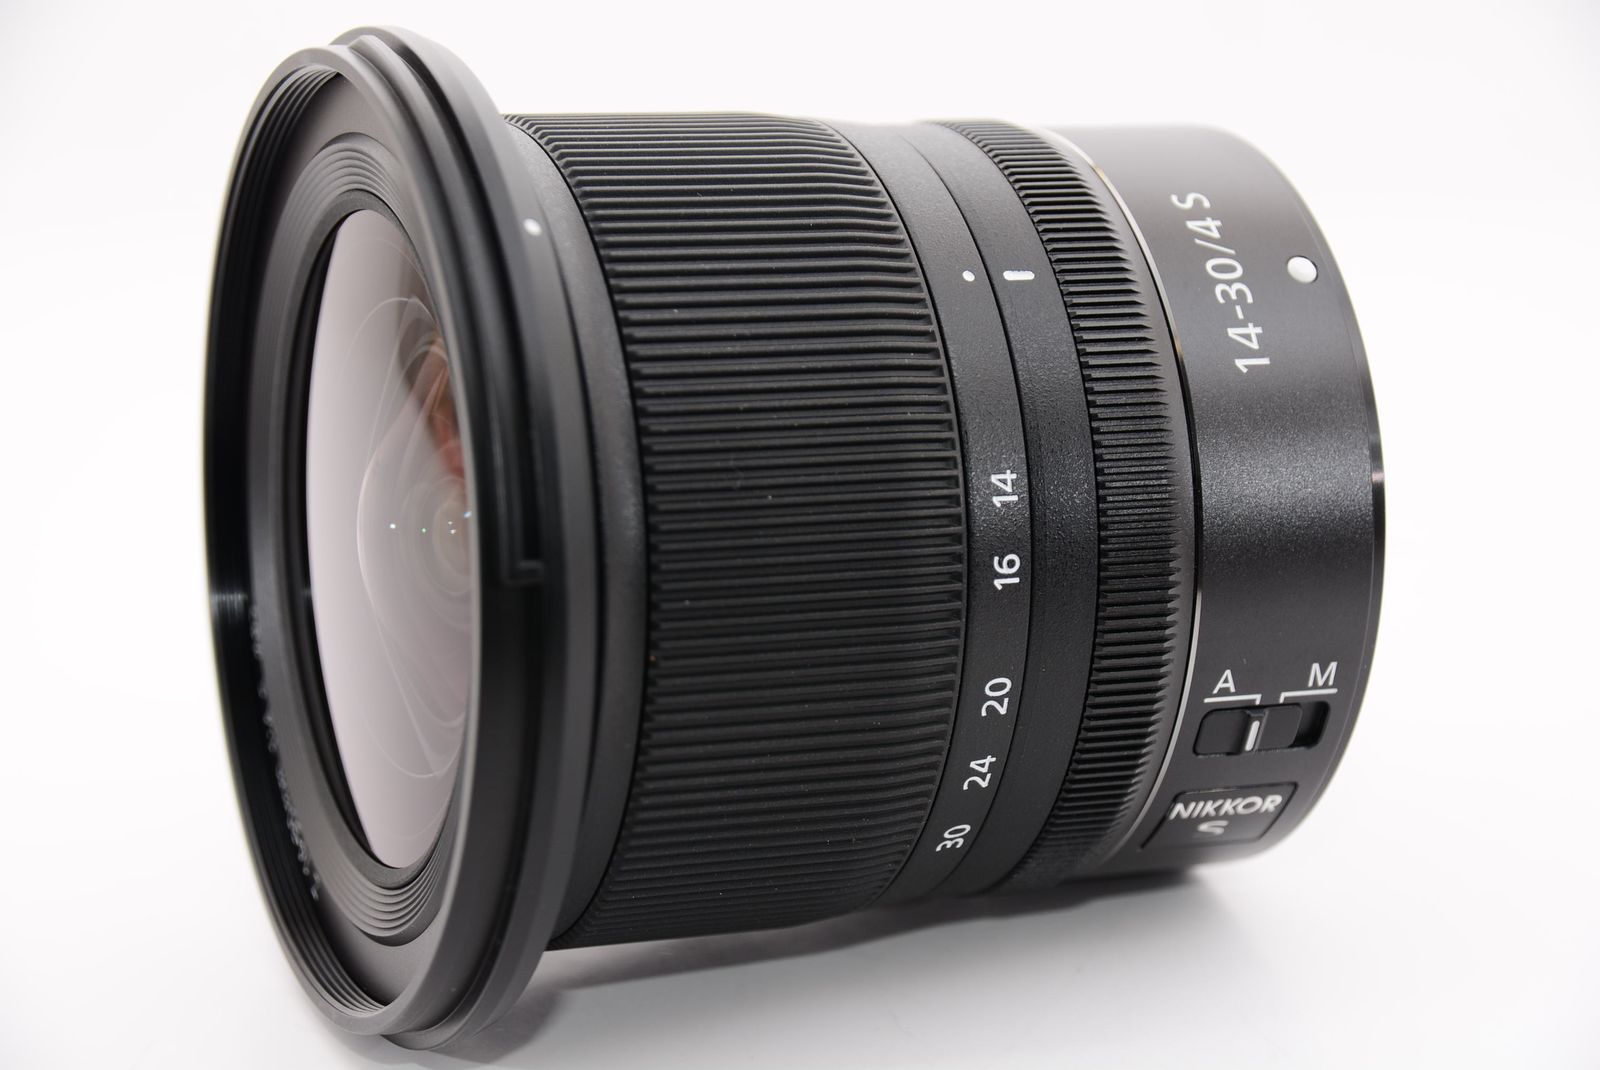 Nikon z 14-30mm f/4s 超広角レンズ - カメラ、光学機器